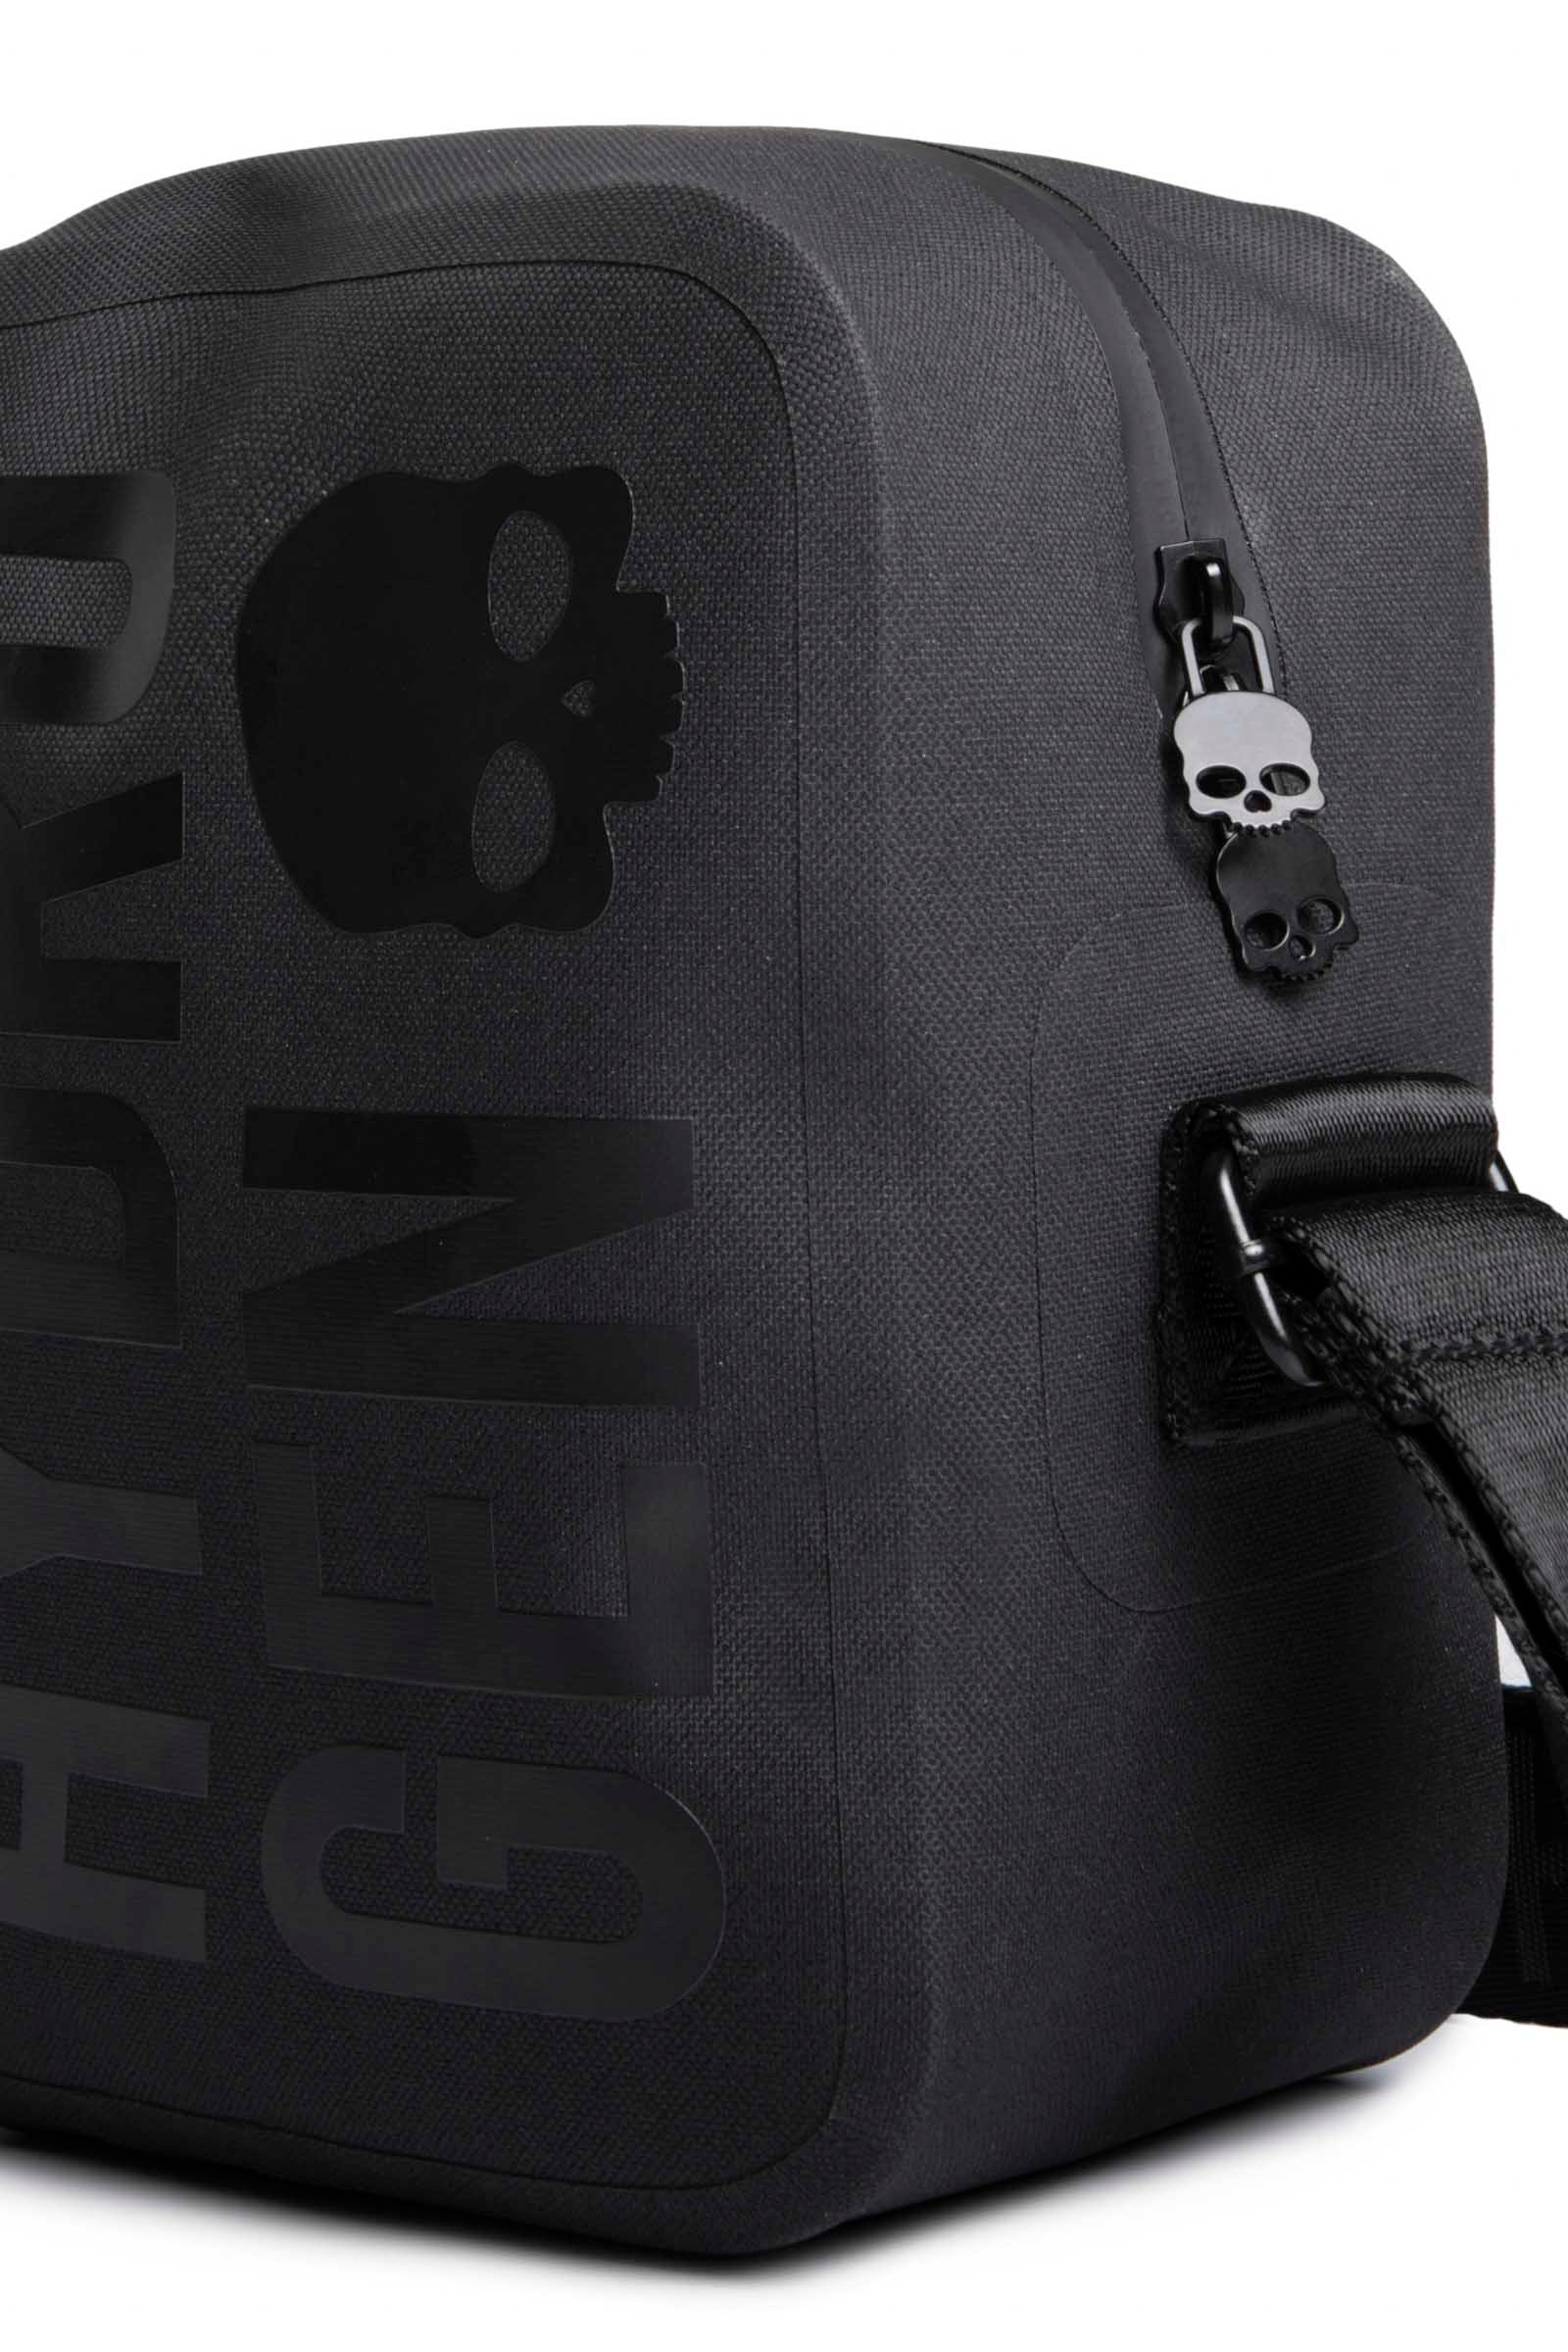 SHOULDER BAG - BLACK - Abbigliamento sportivo | Hydrogen